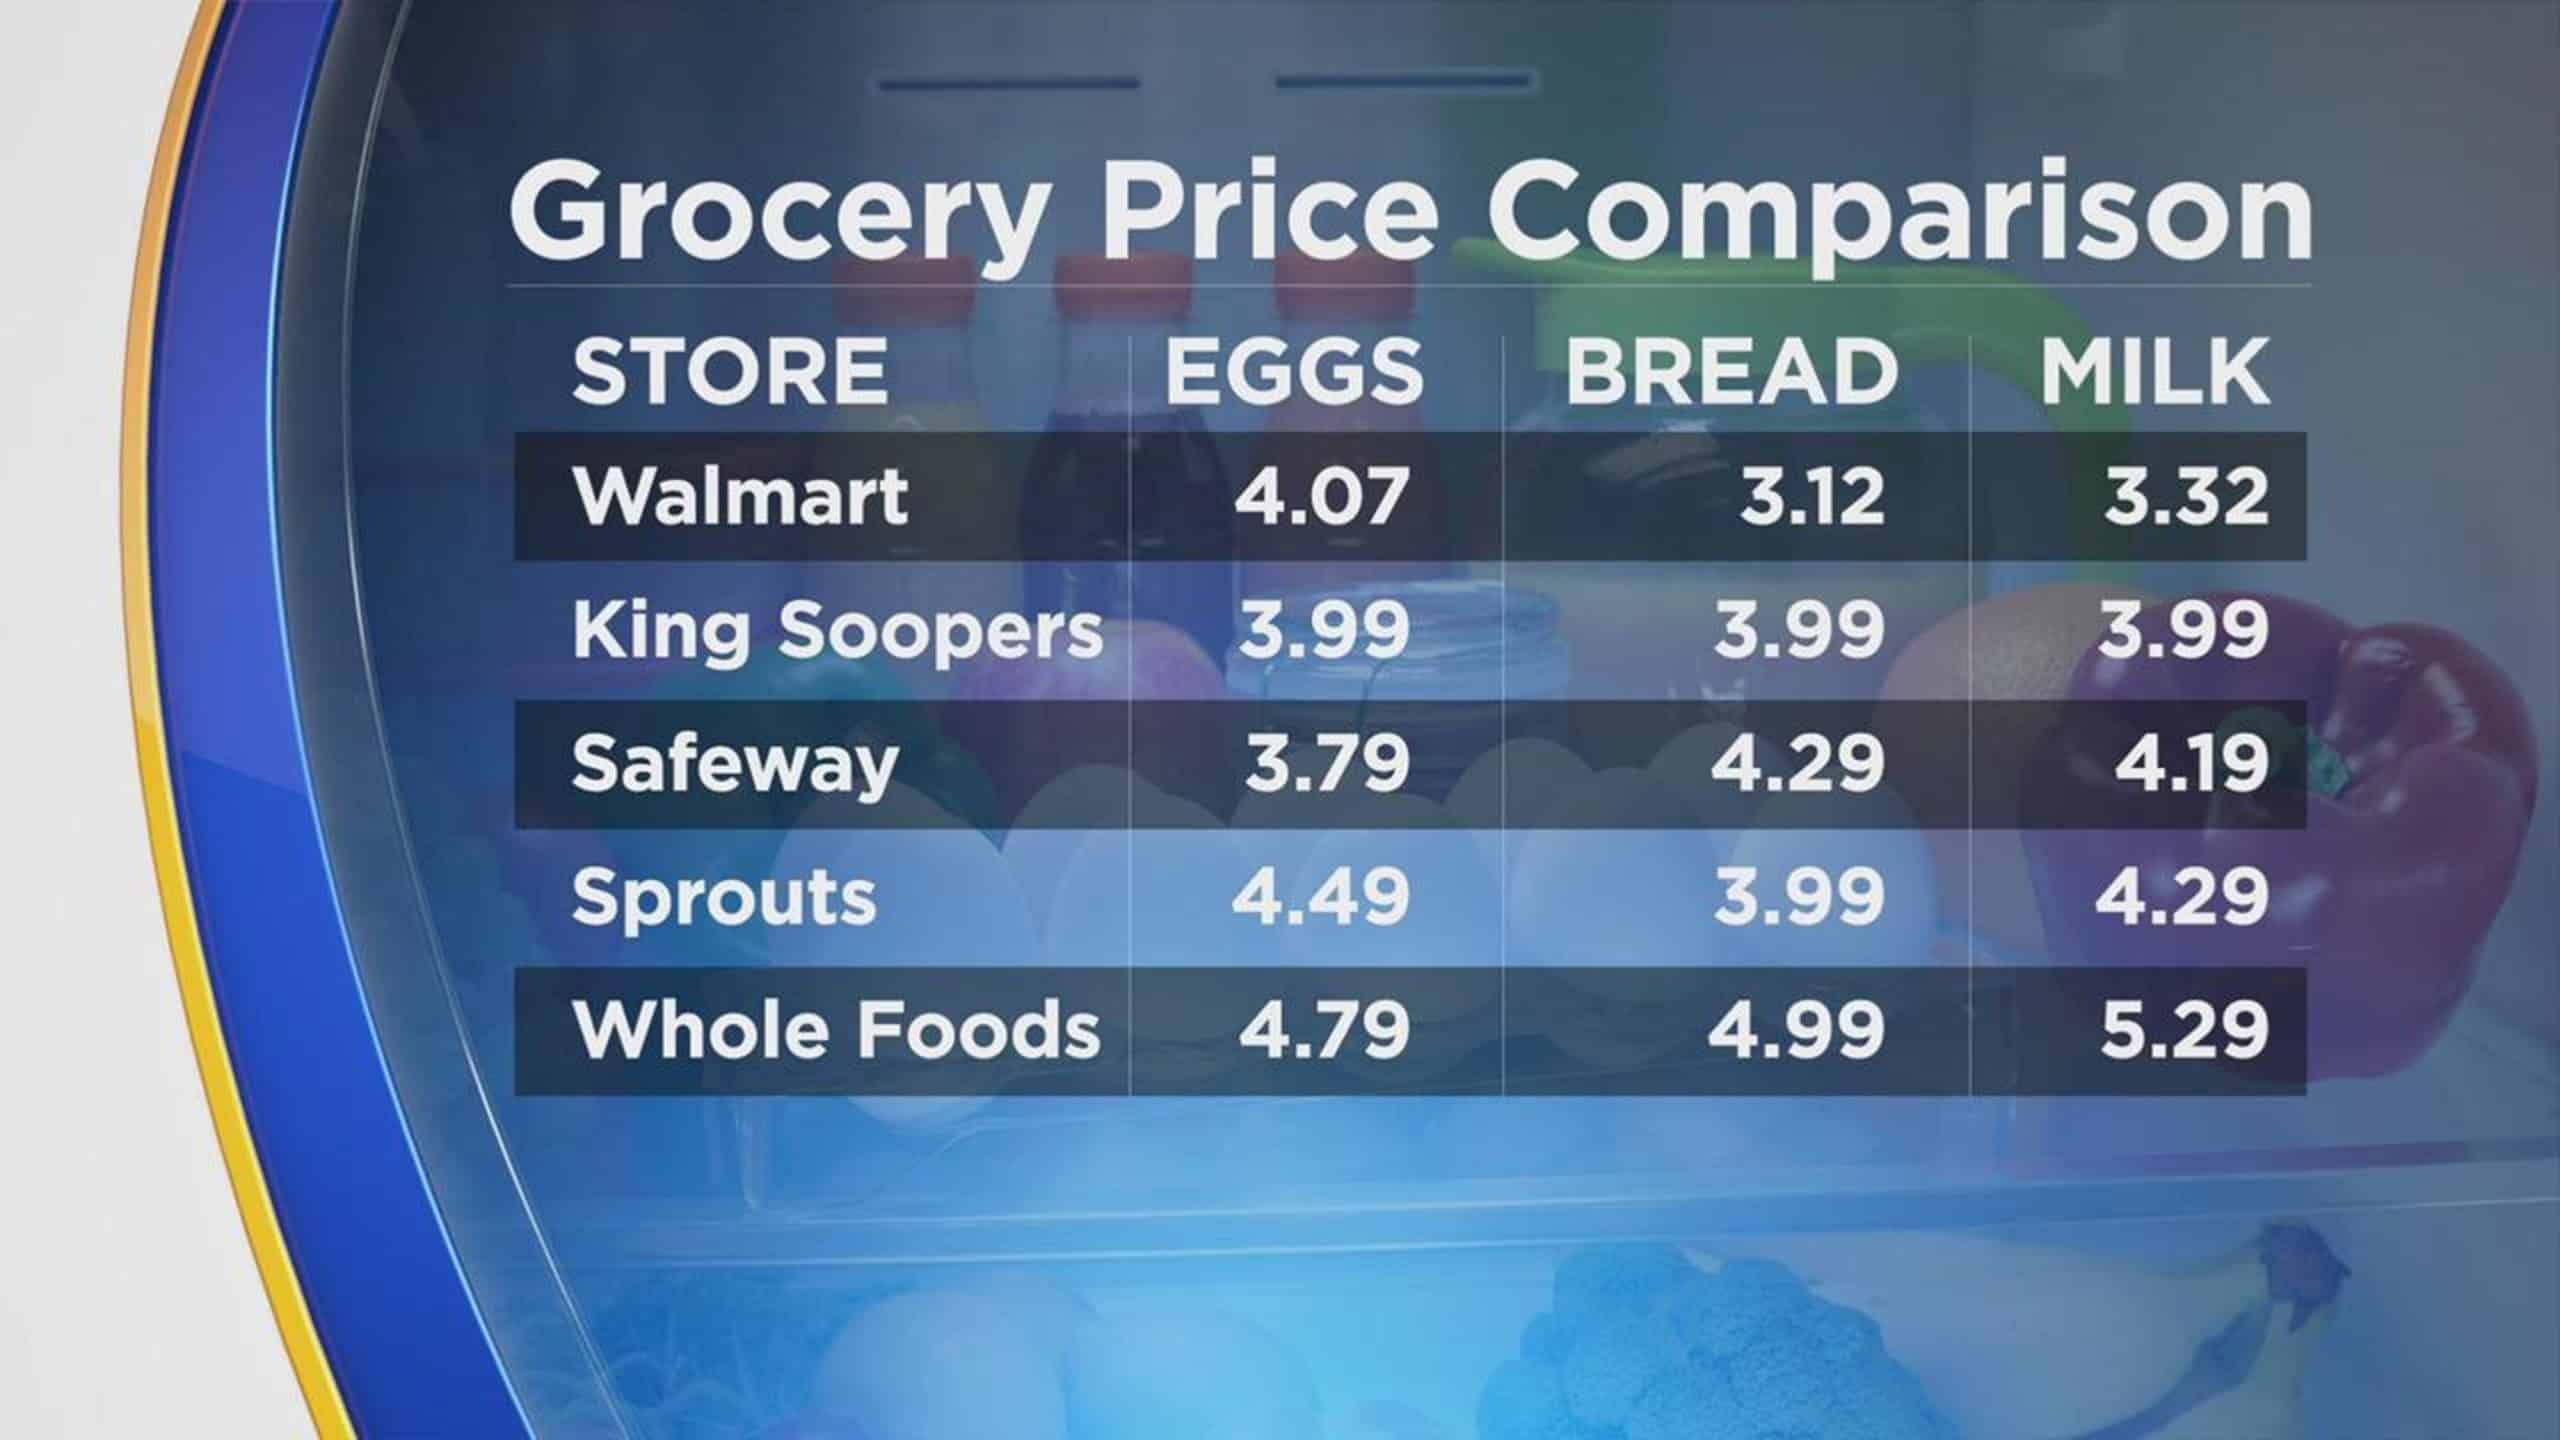 Sprouts vs. Whole Foods bread milk eggs 